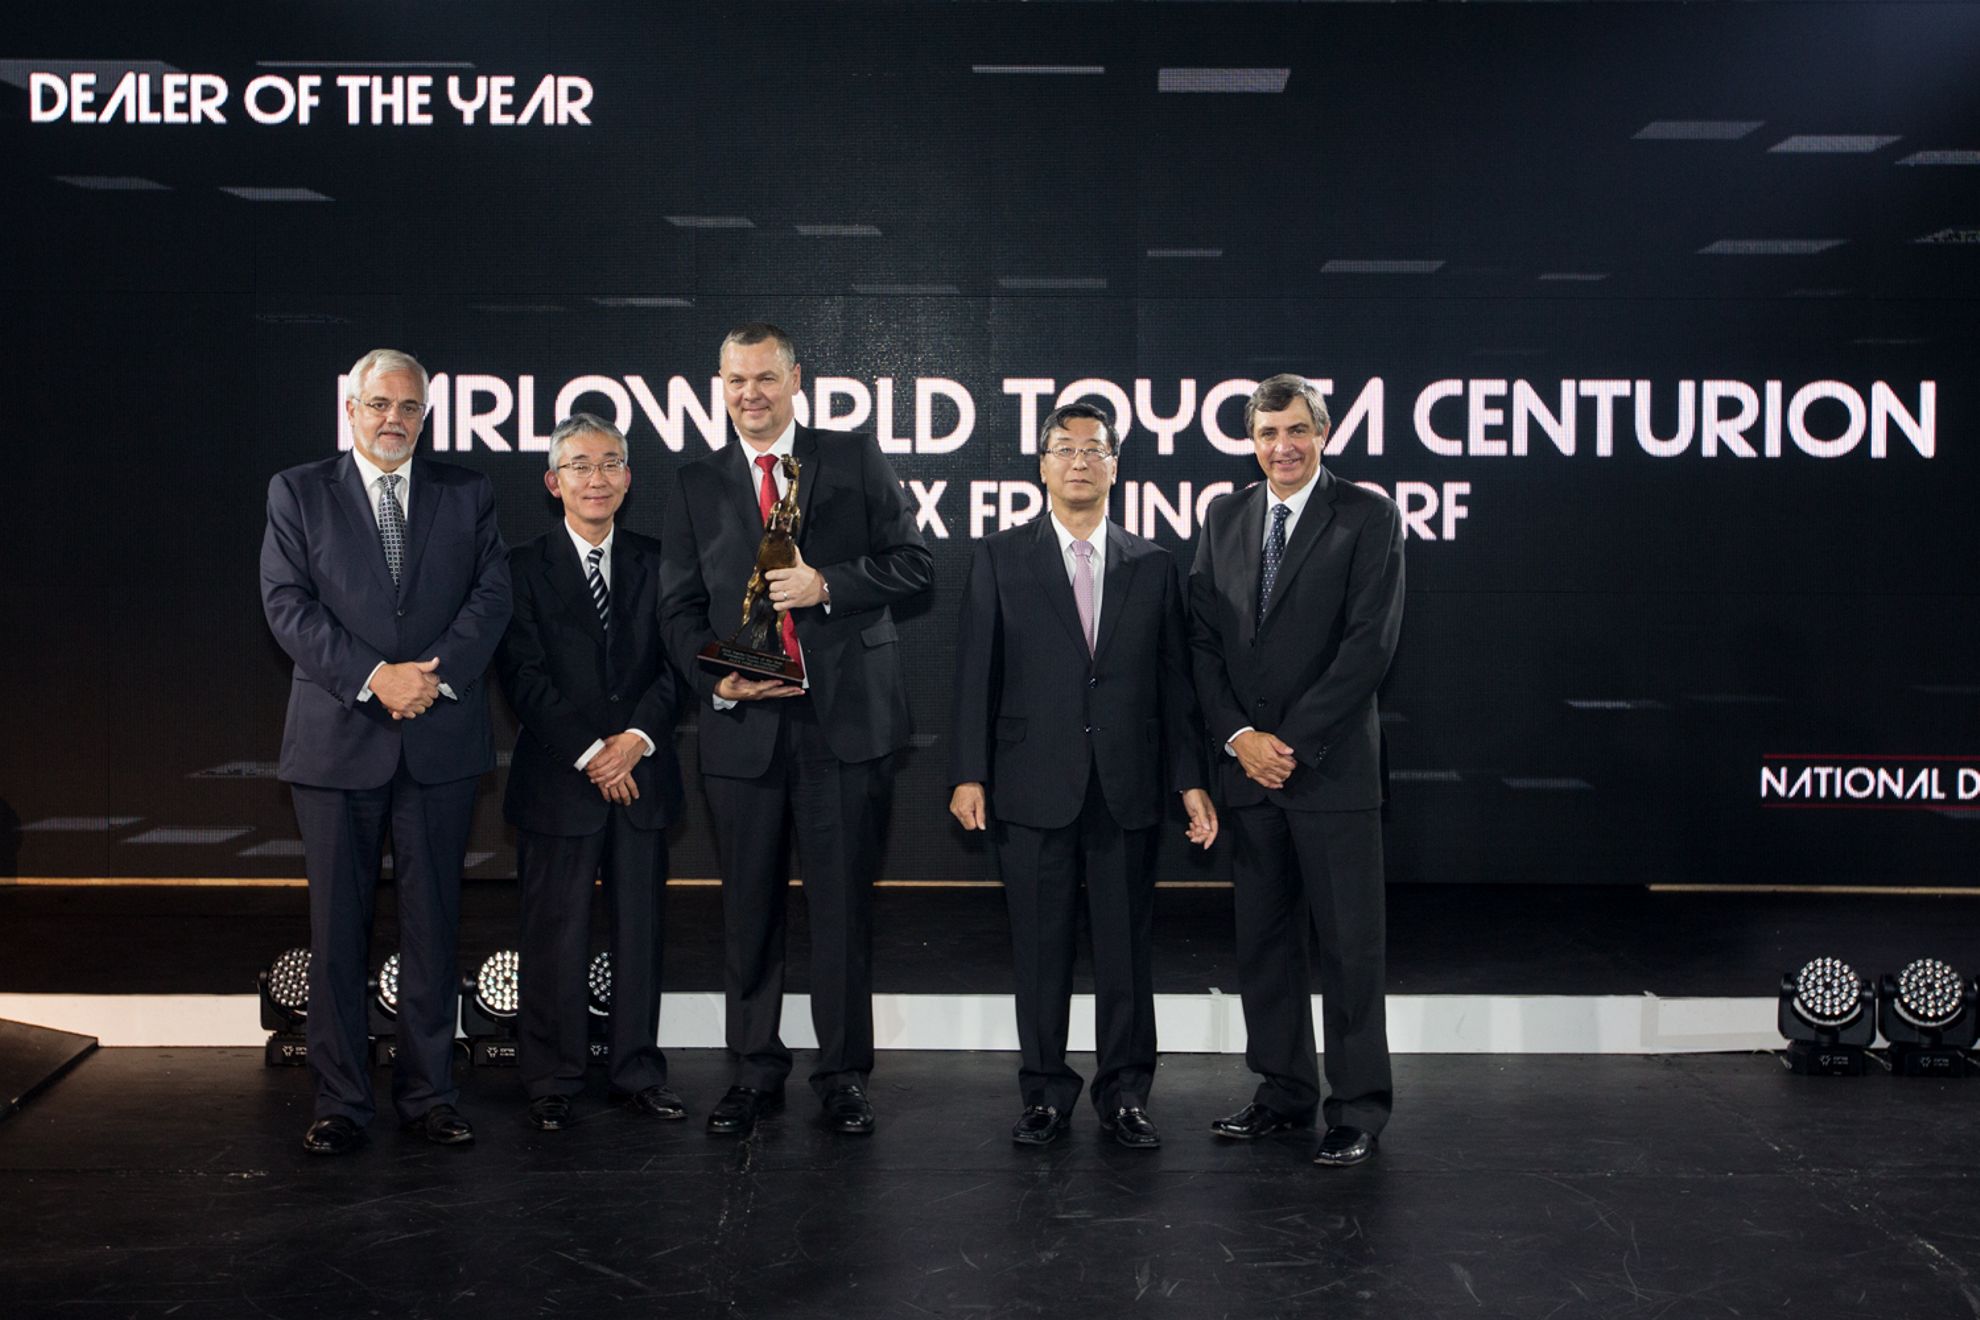 Barloworld Toyota Centurion Dealership of the Year